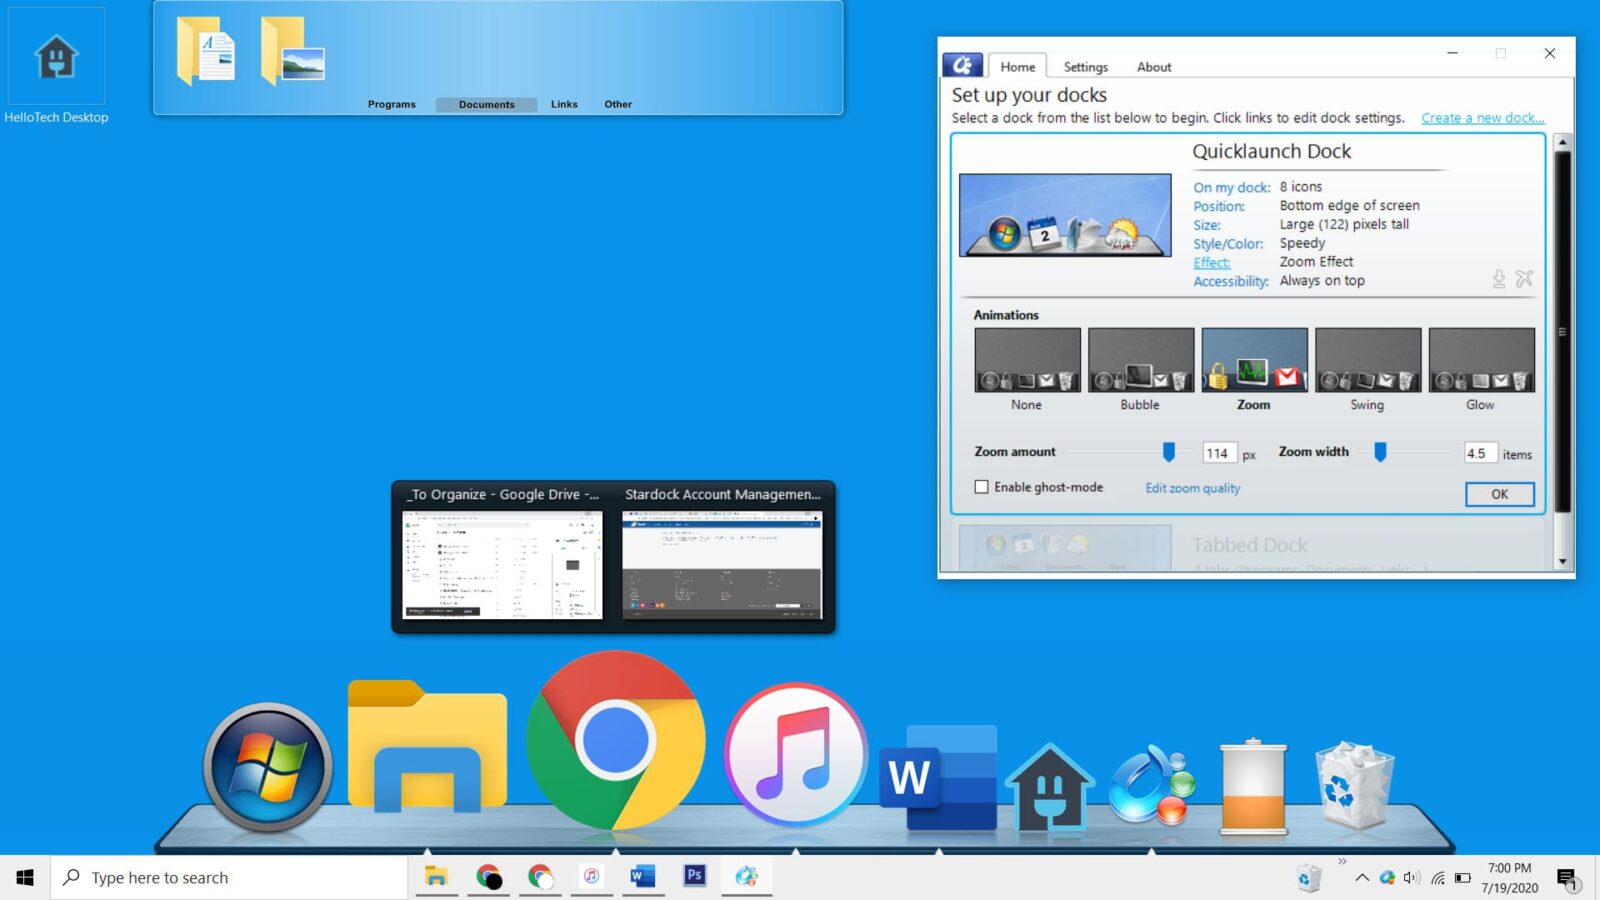 download dock for windows 10